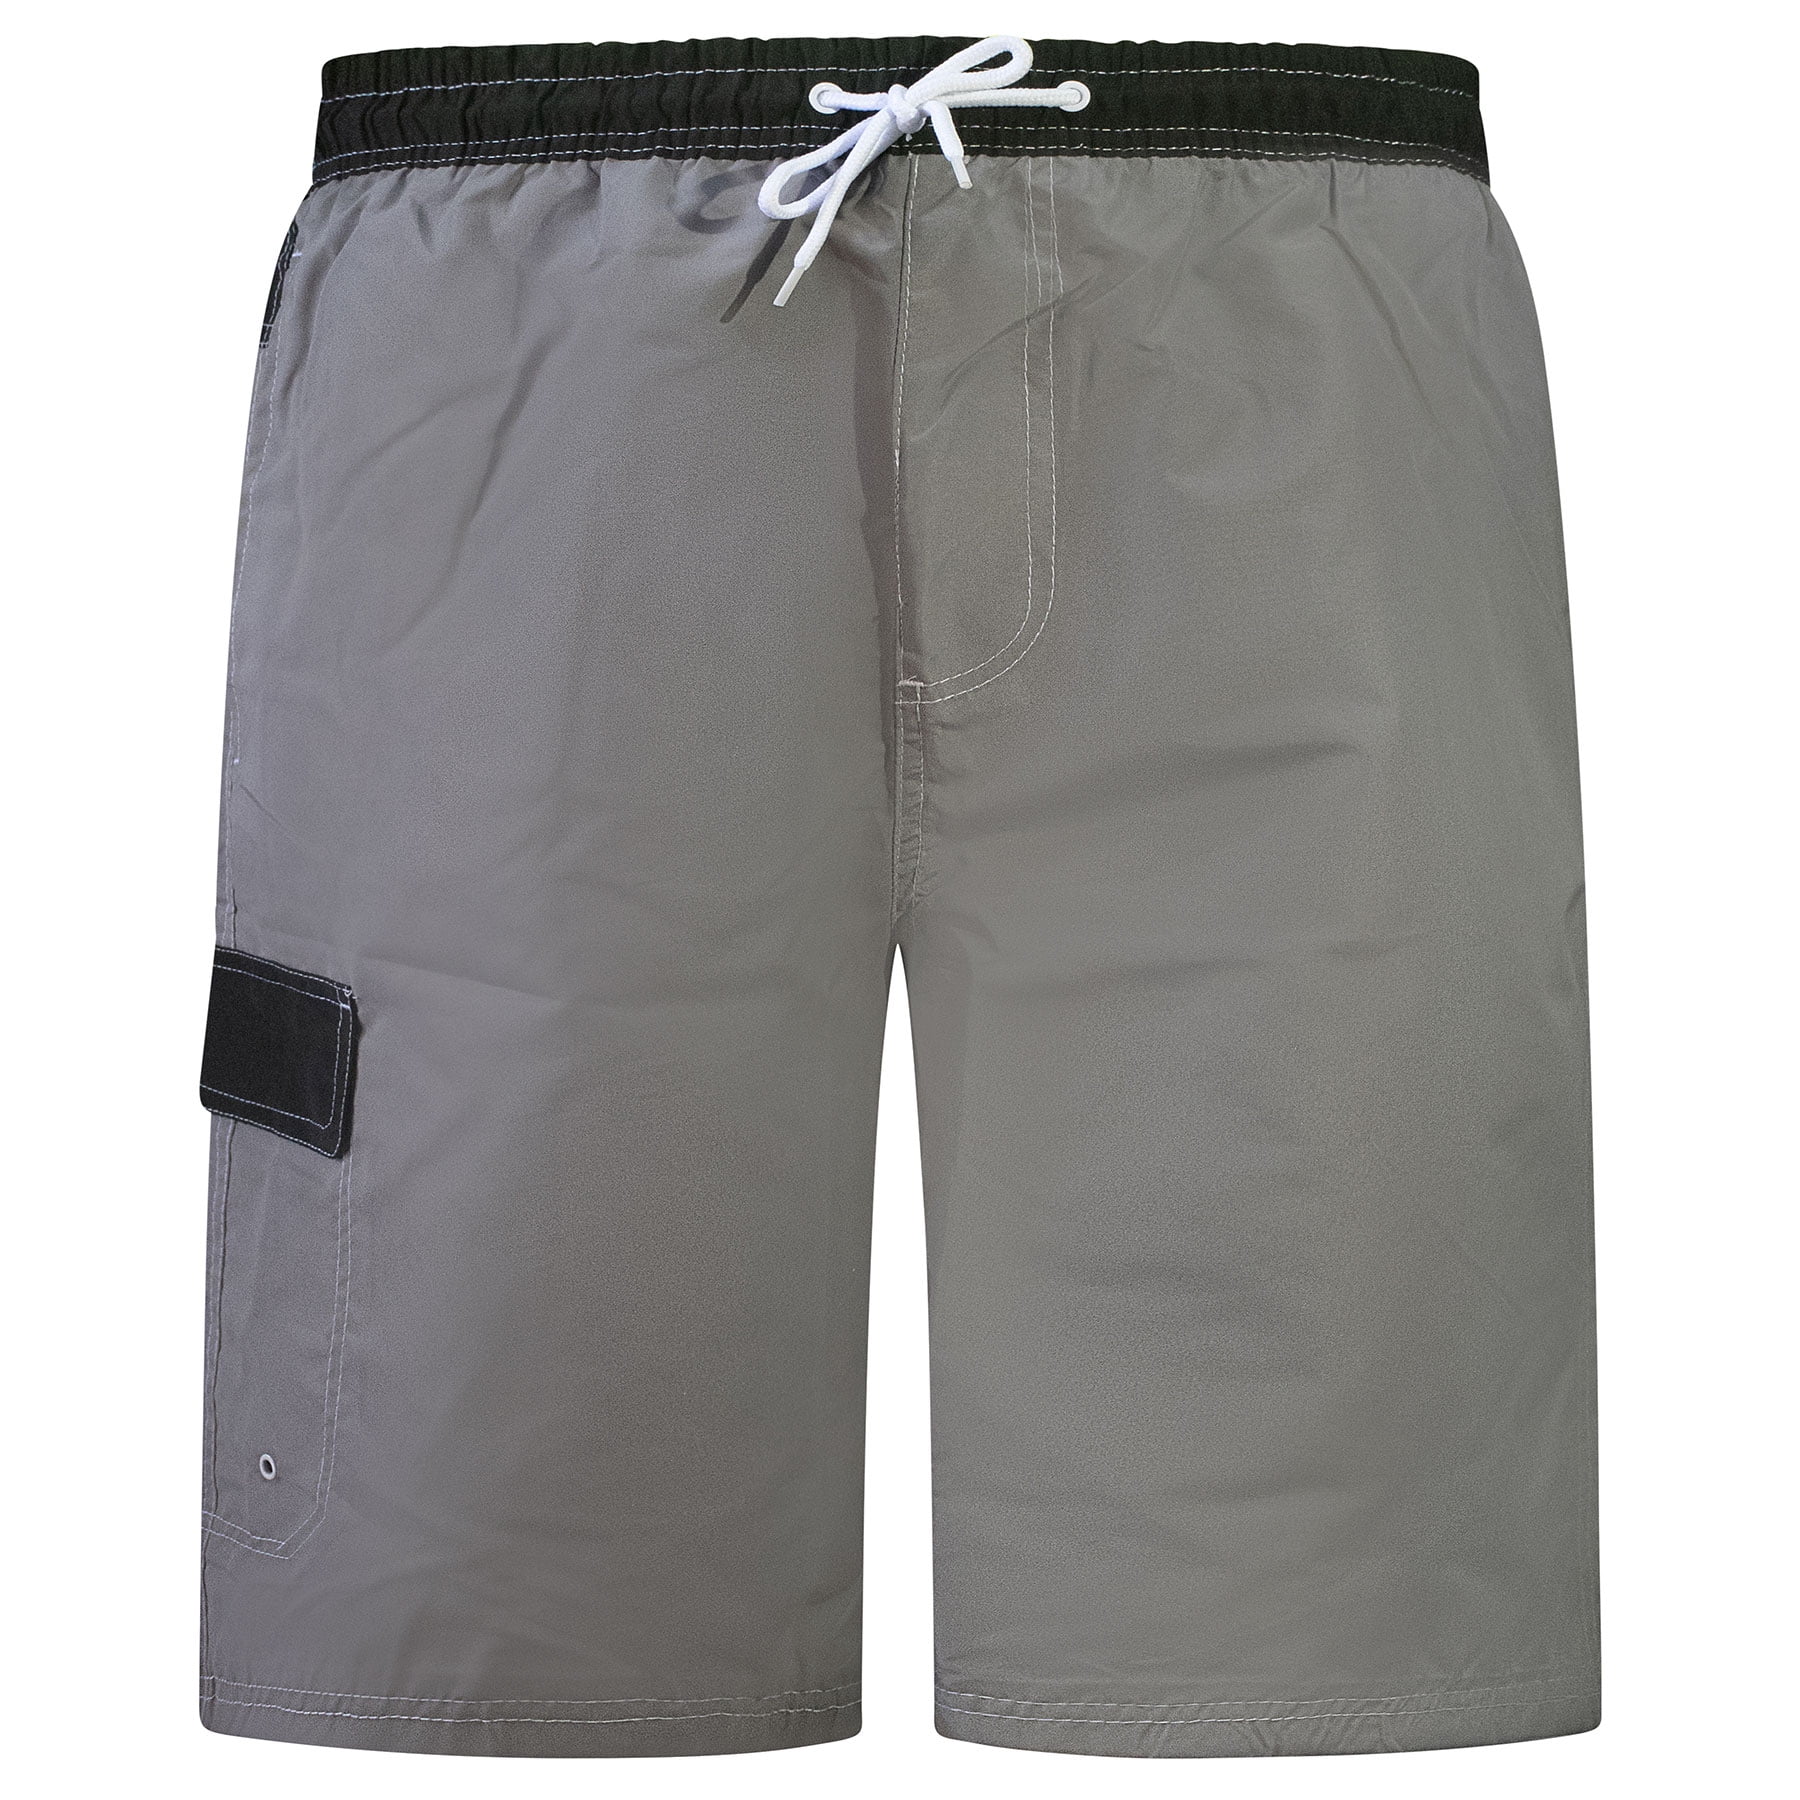 North 15 Boy's Beach Swim Trunks Shorts with Cargo Pockets-6104B